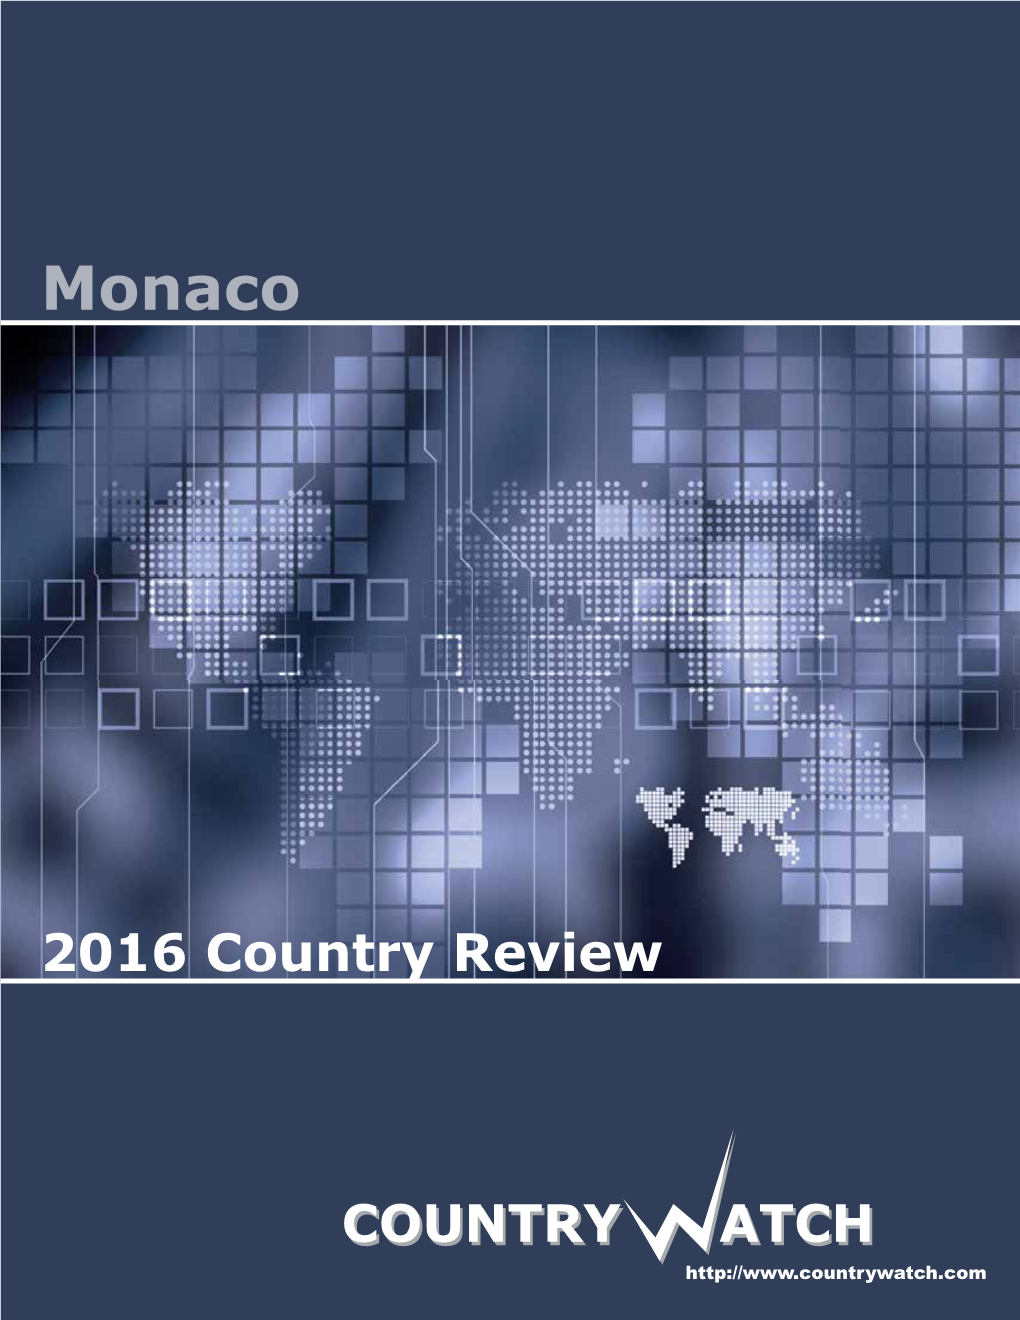 Monaco 2016 Country Review